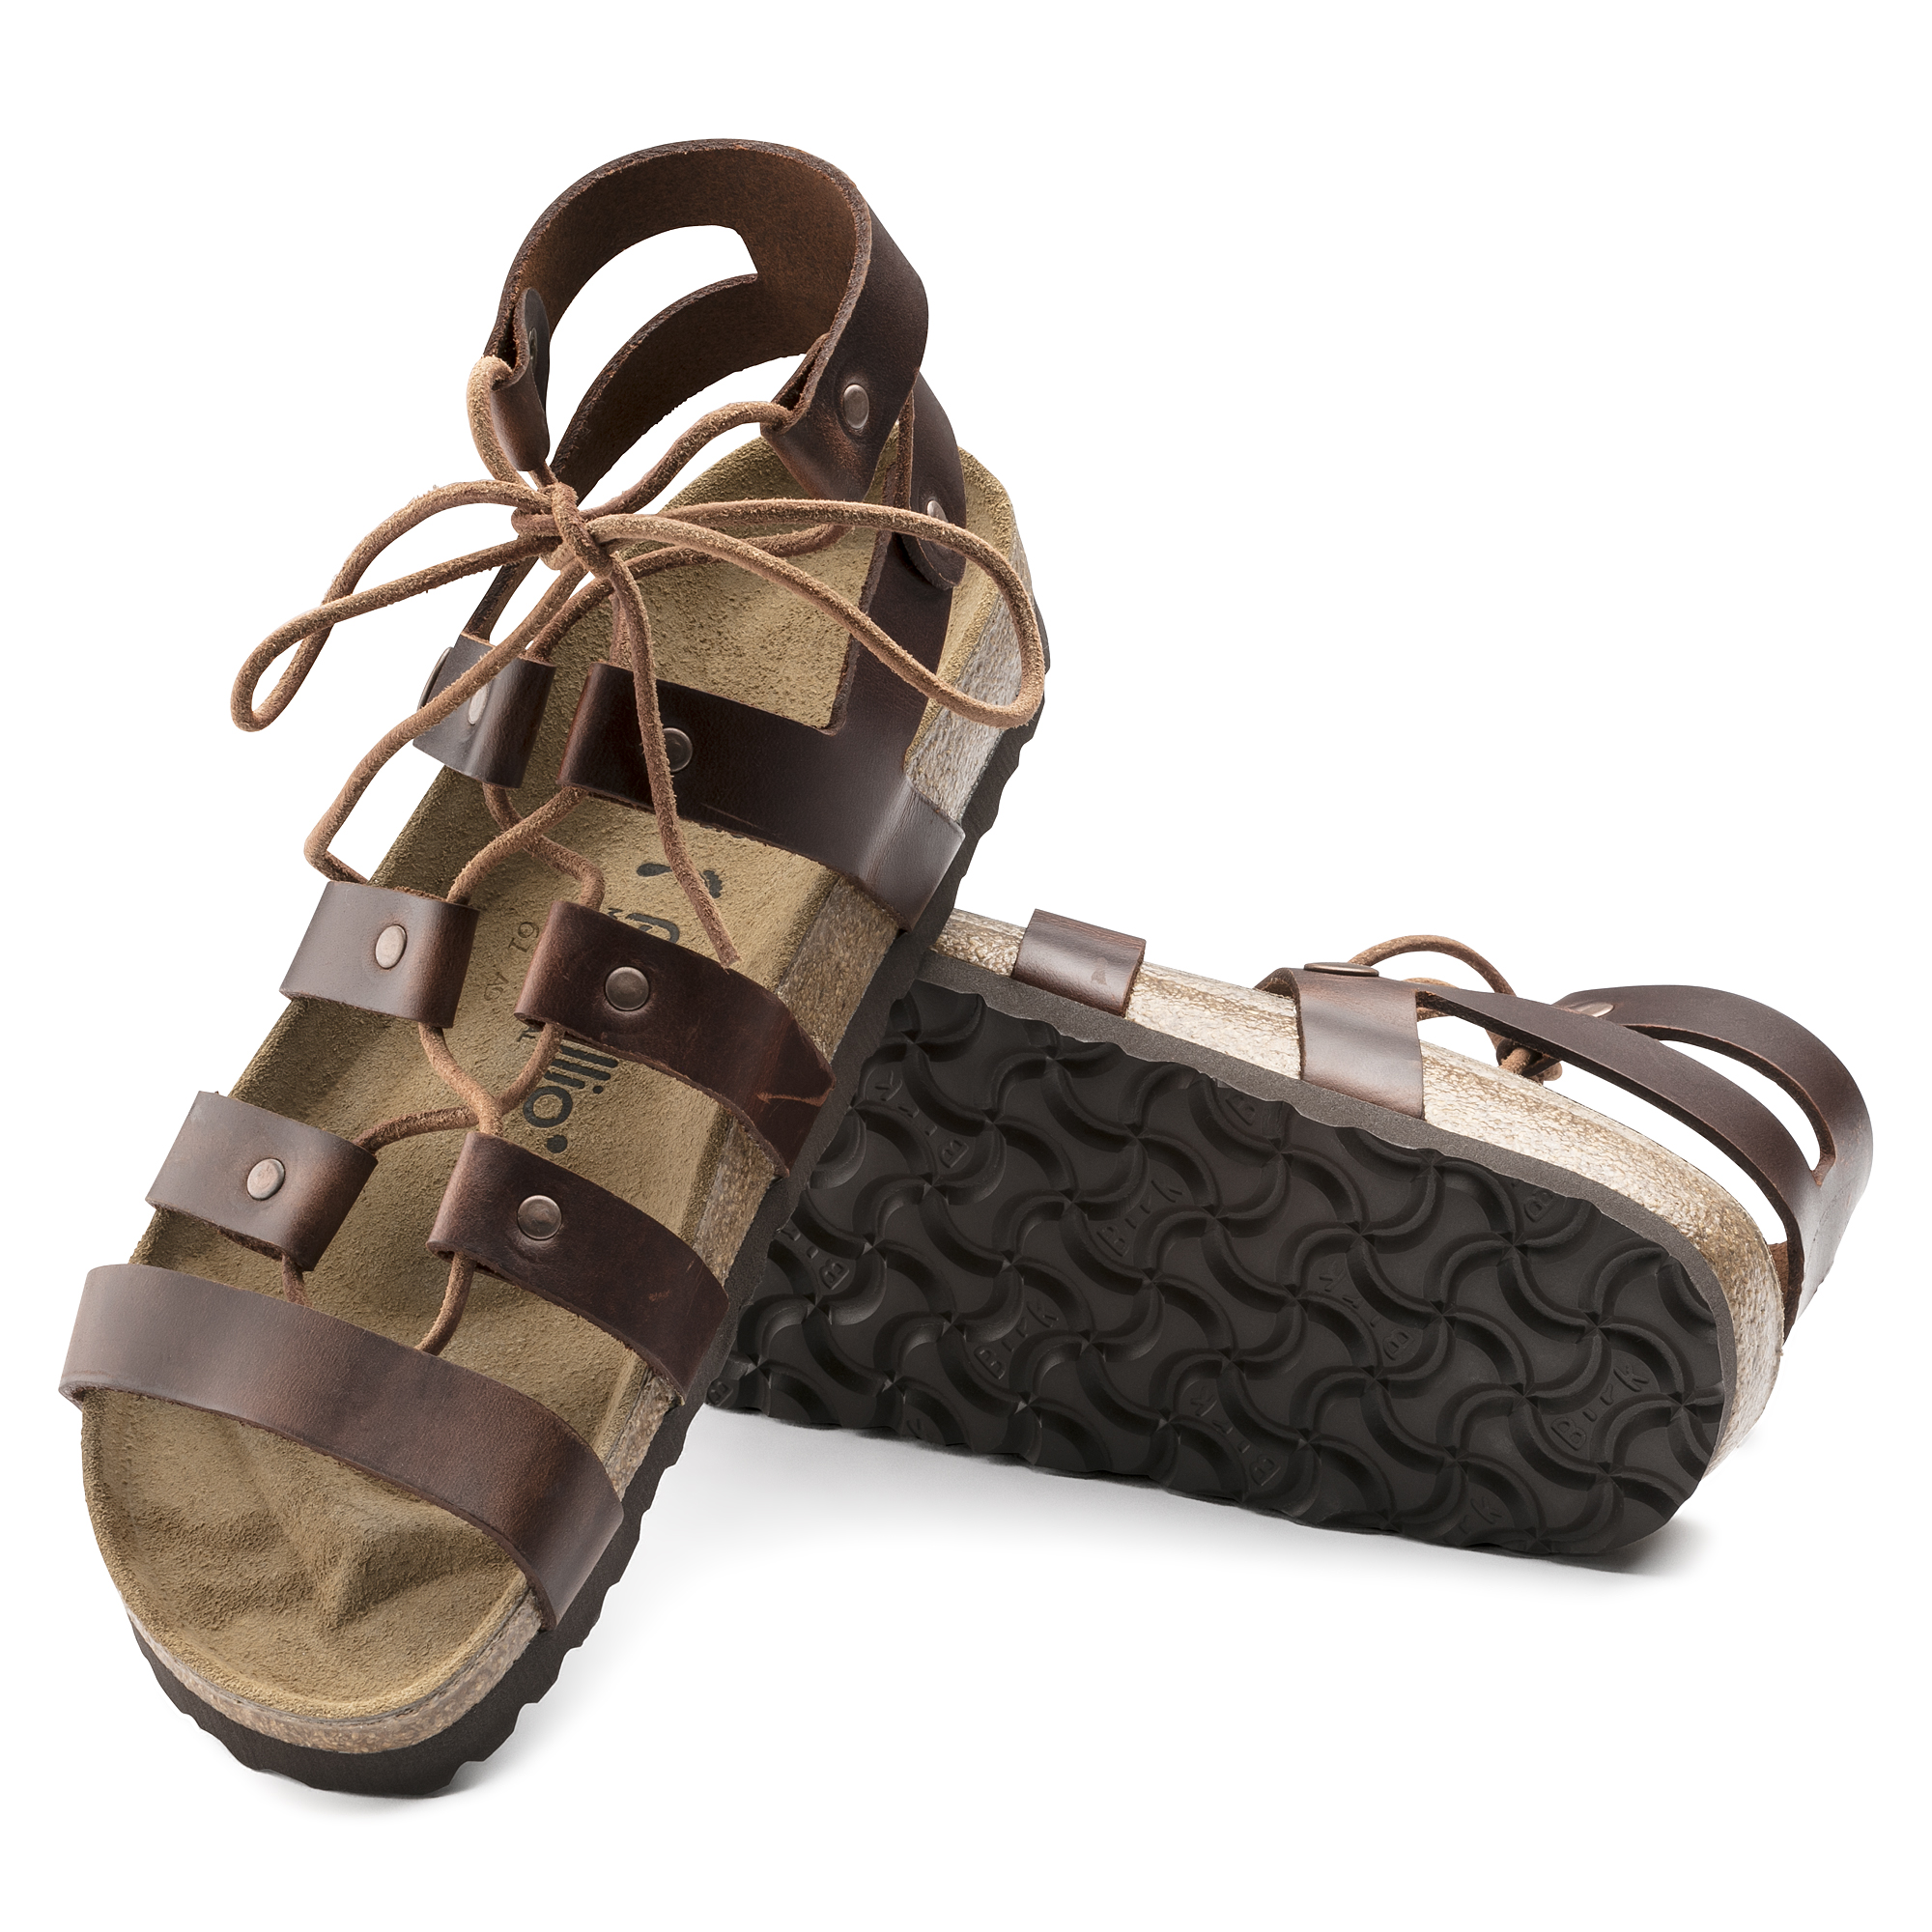 birkenstock cleo sandal